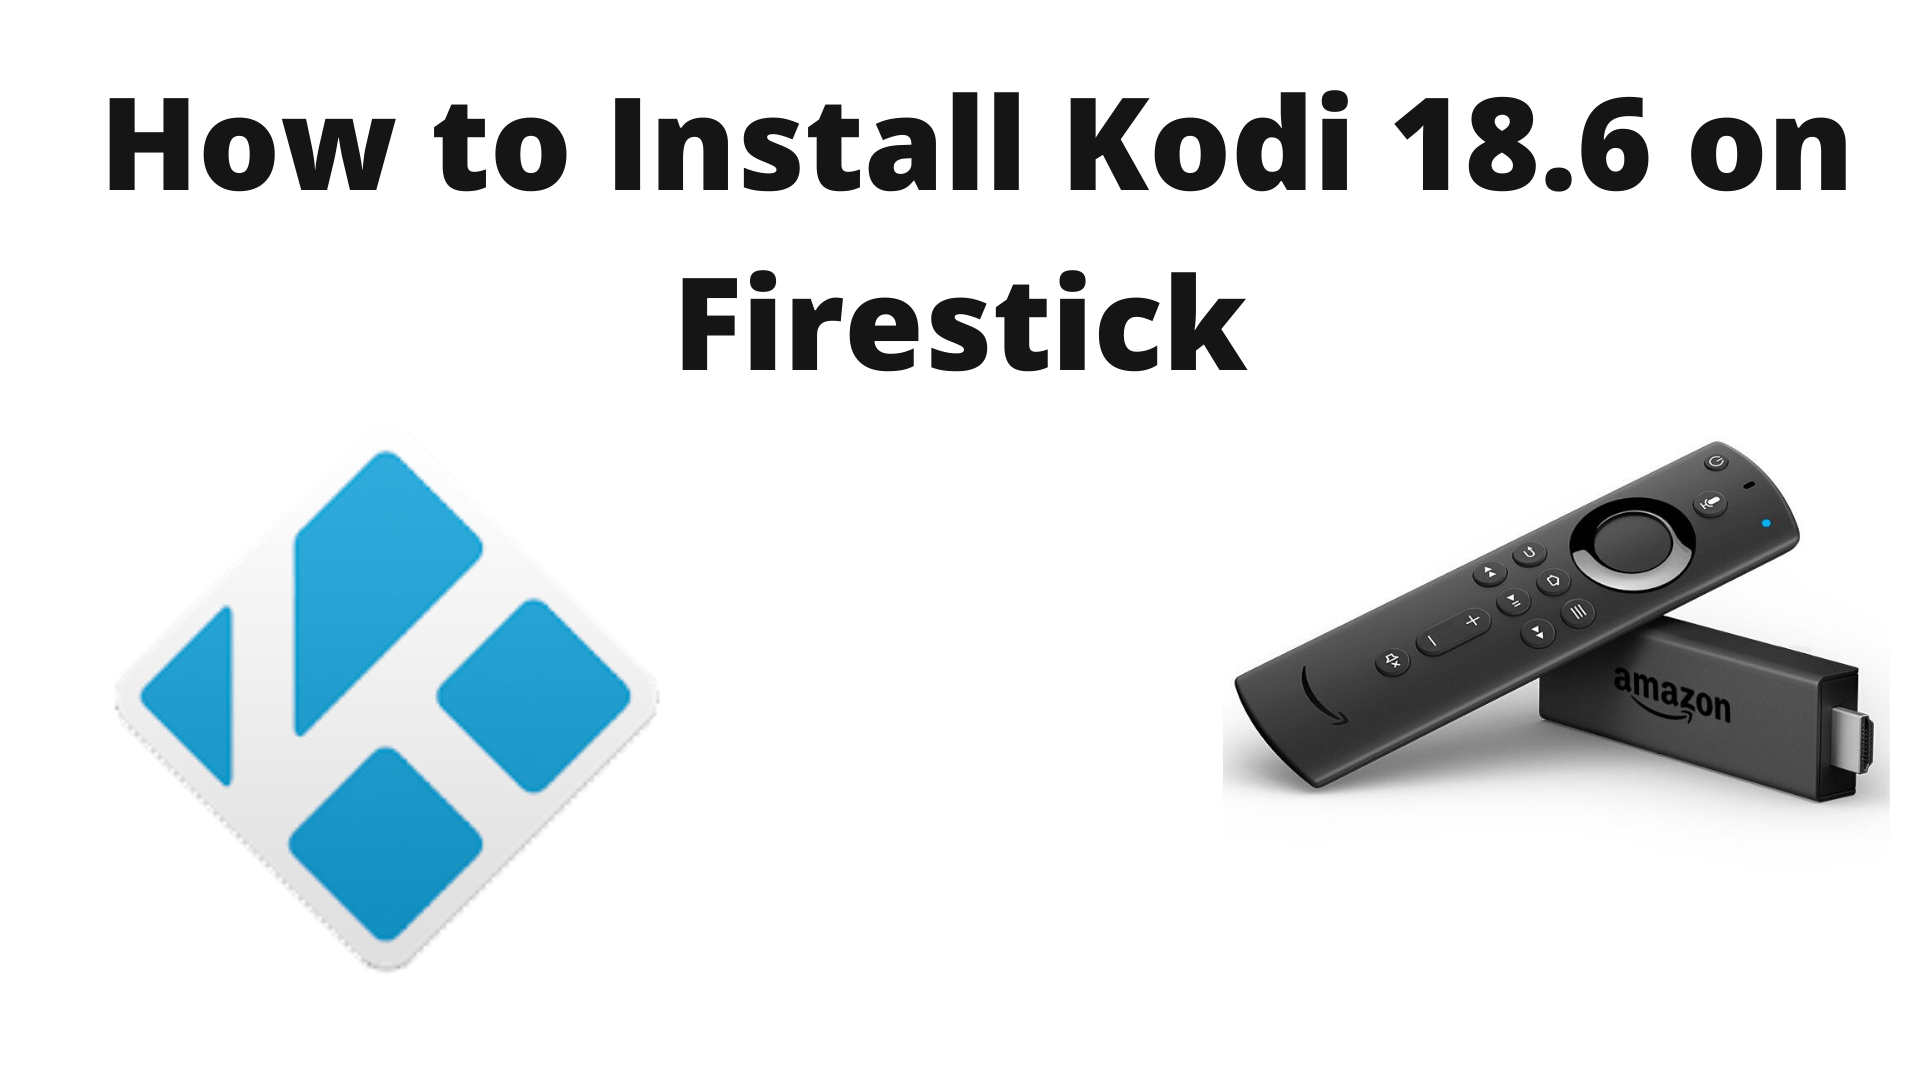 How to Install Kodi 18.6 on Firestick